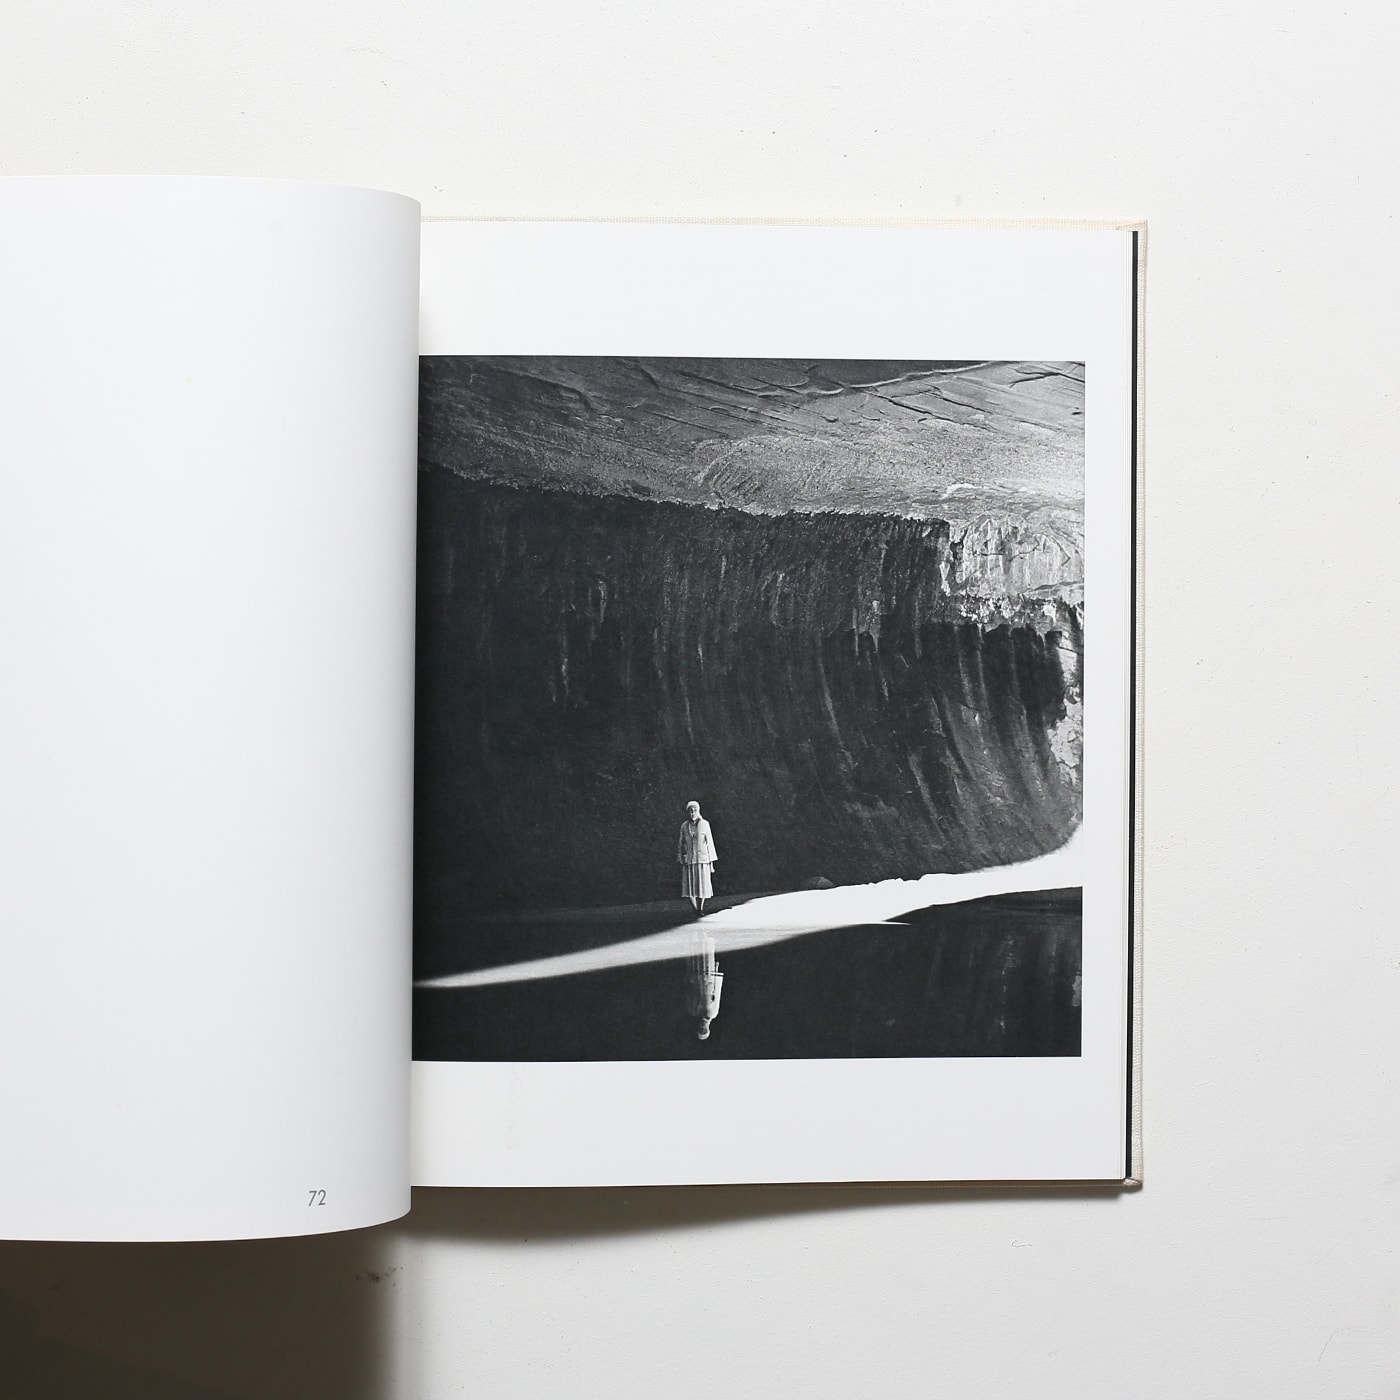 Georgia O’Keeffe: The Artist’s Landscape